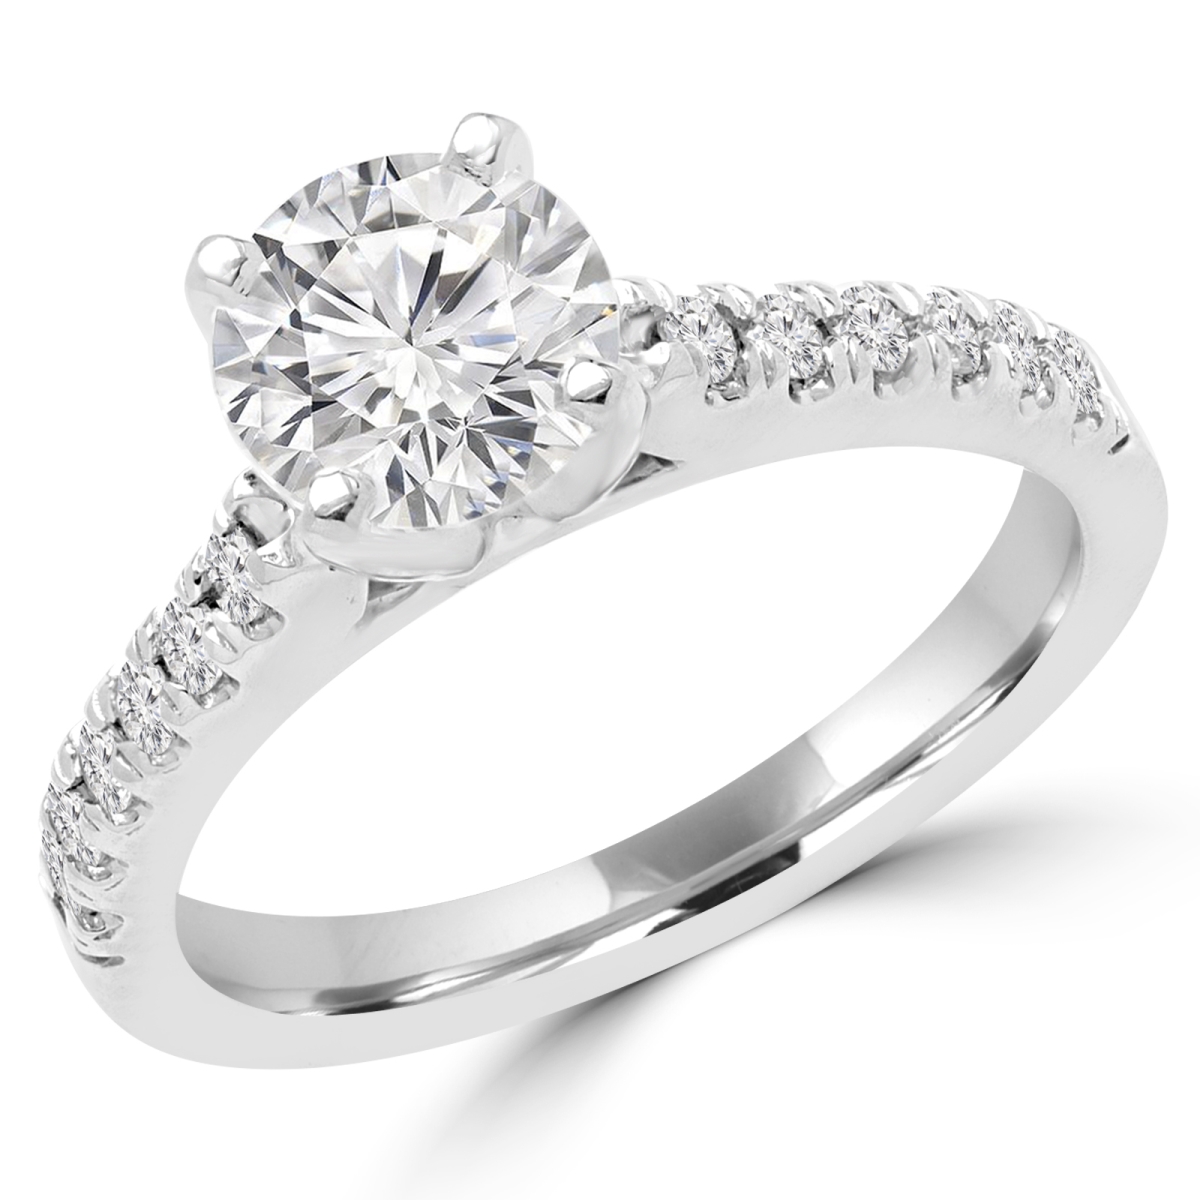 MD160214-3.75 0.8 CTW Multi-Stone Round Diamond Engagement Ring in 14K White Gold - Size 3.75 -  Majesty Diamonds